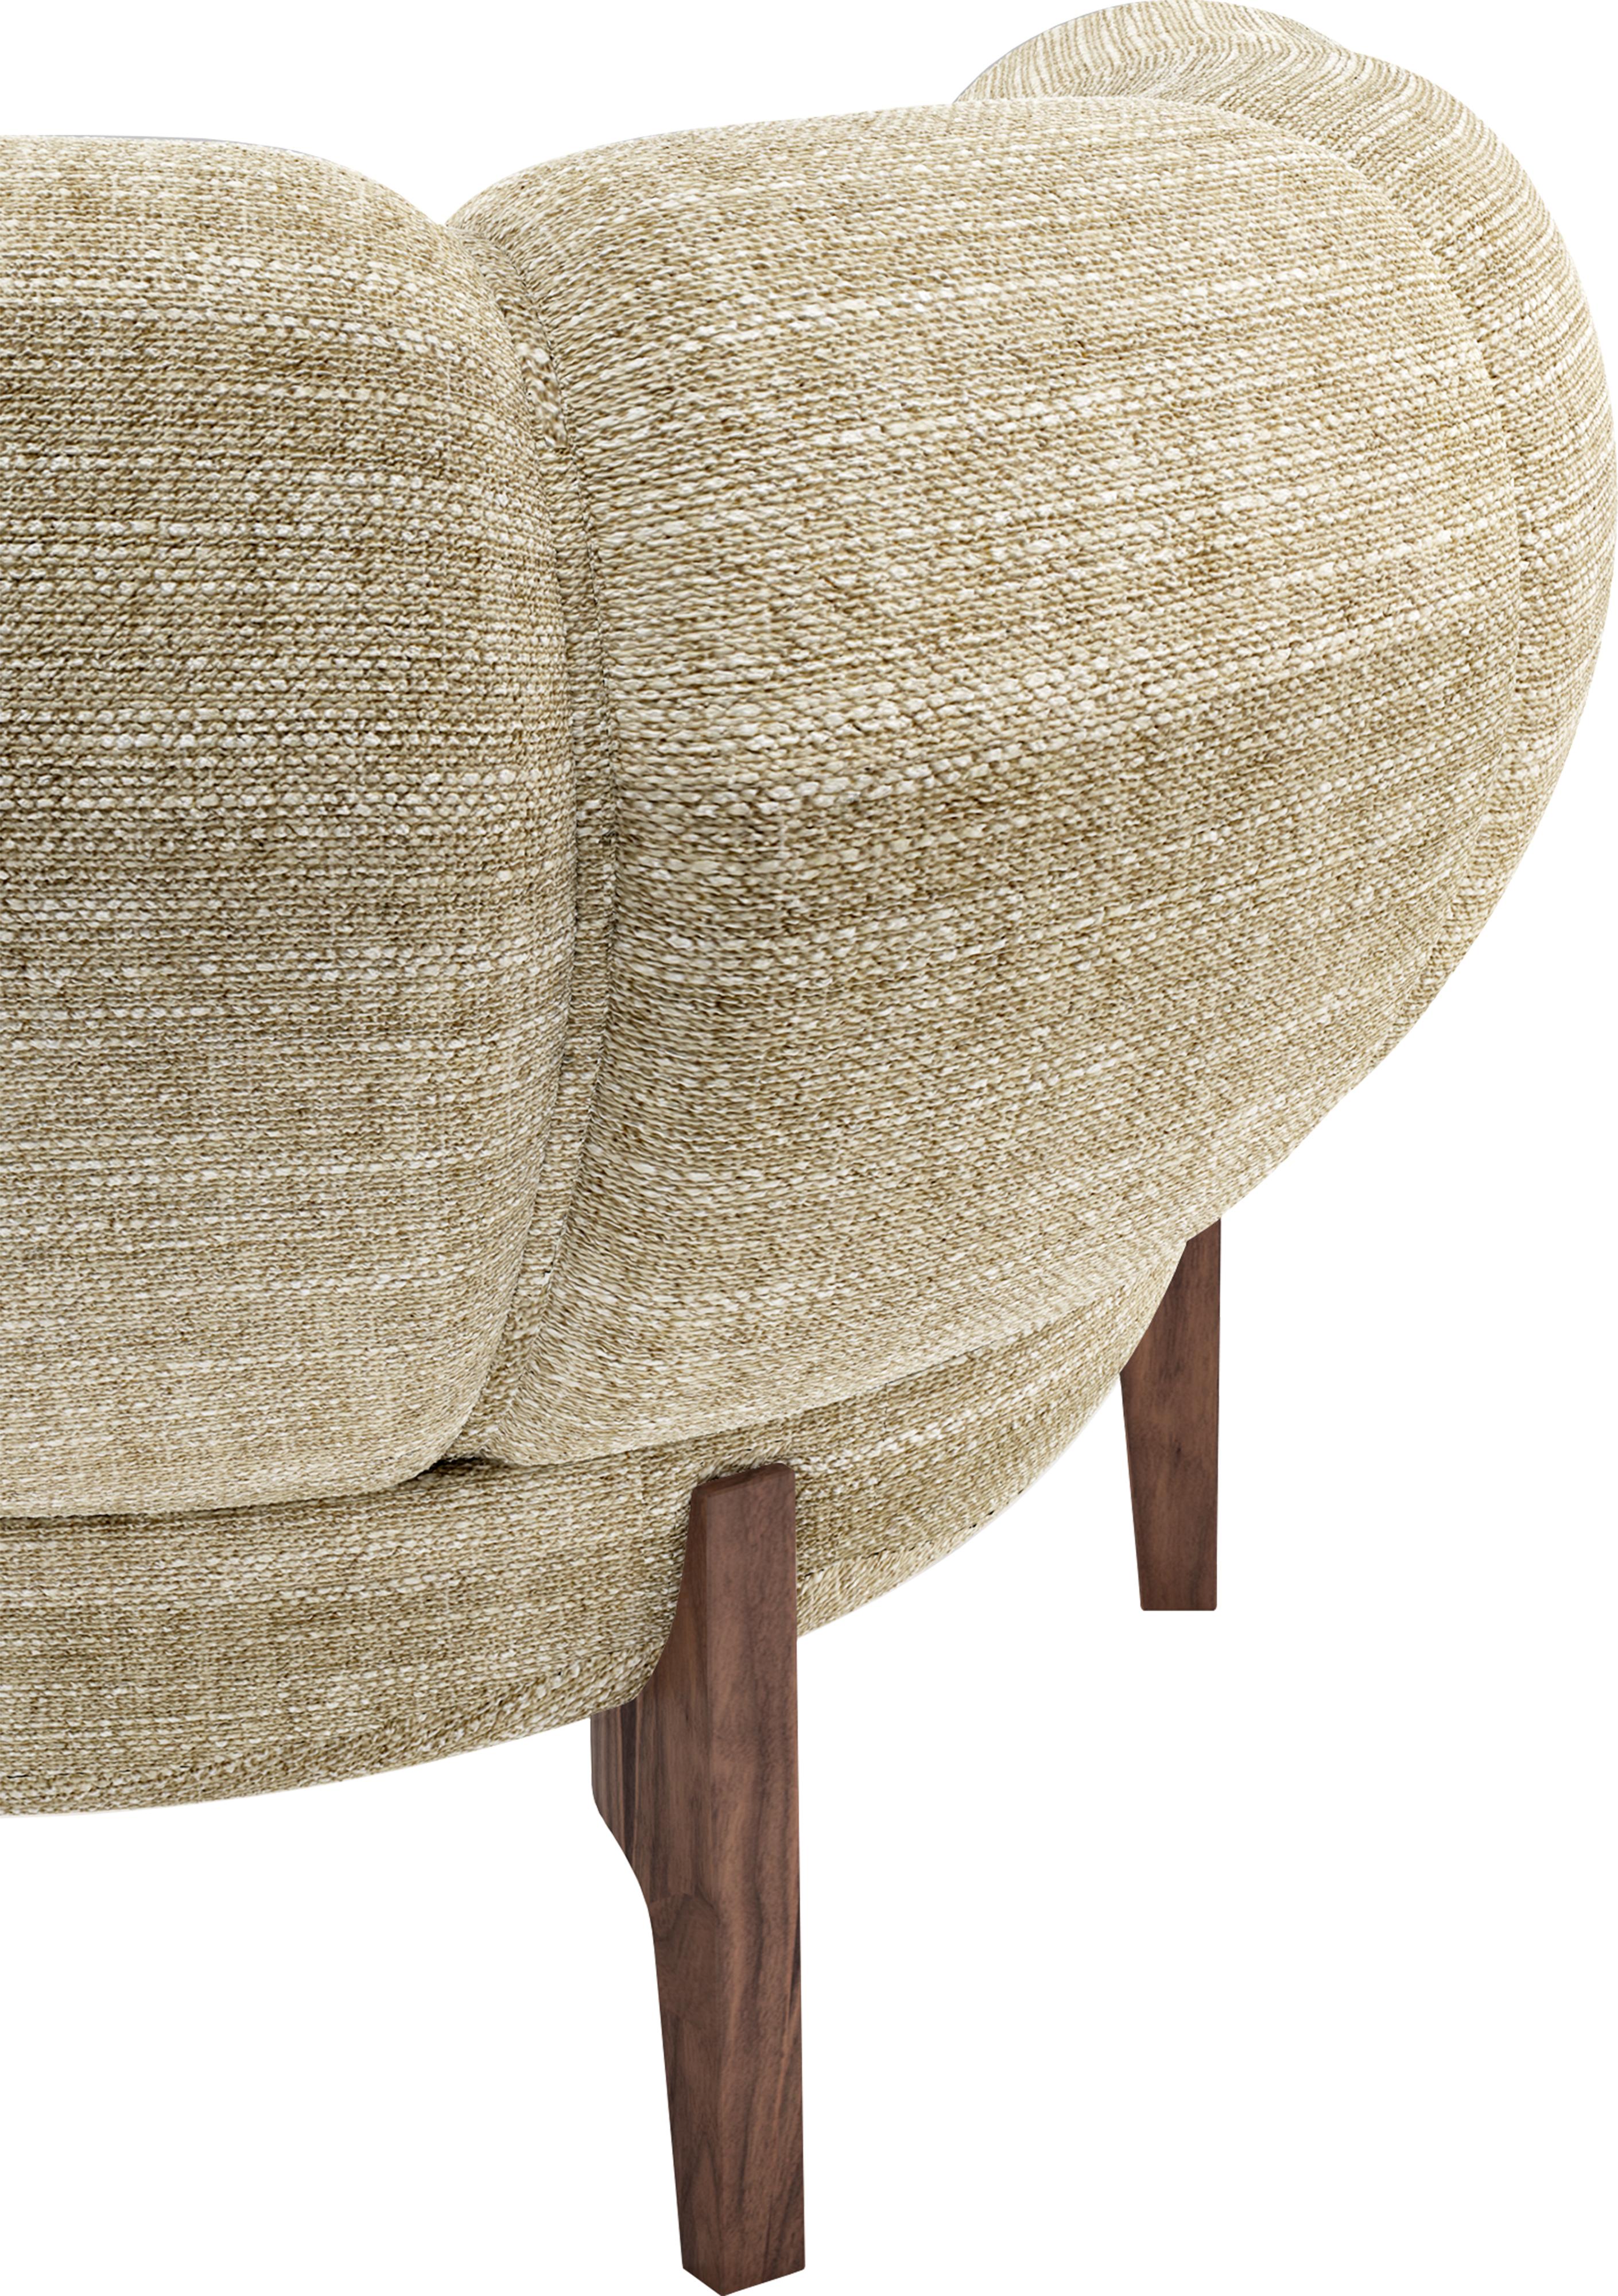 Fabric 'Croissant' Sofa by Illum Wikkelsø for GUBI with Oak Legs For Sale 7